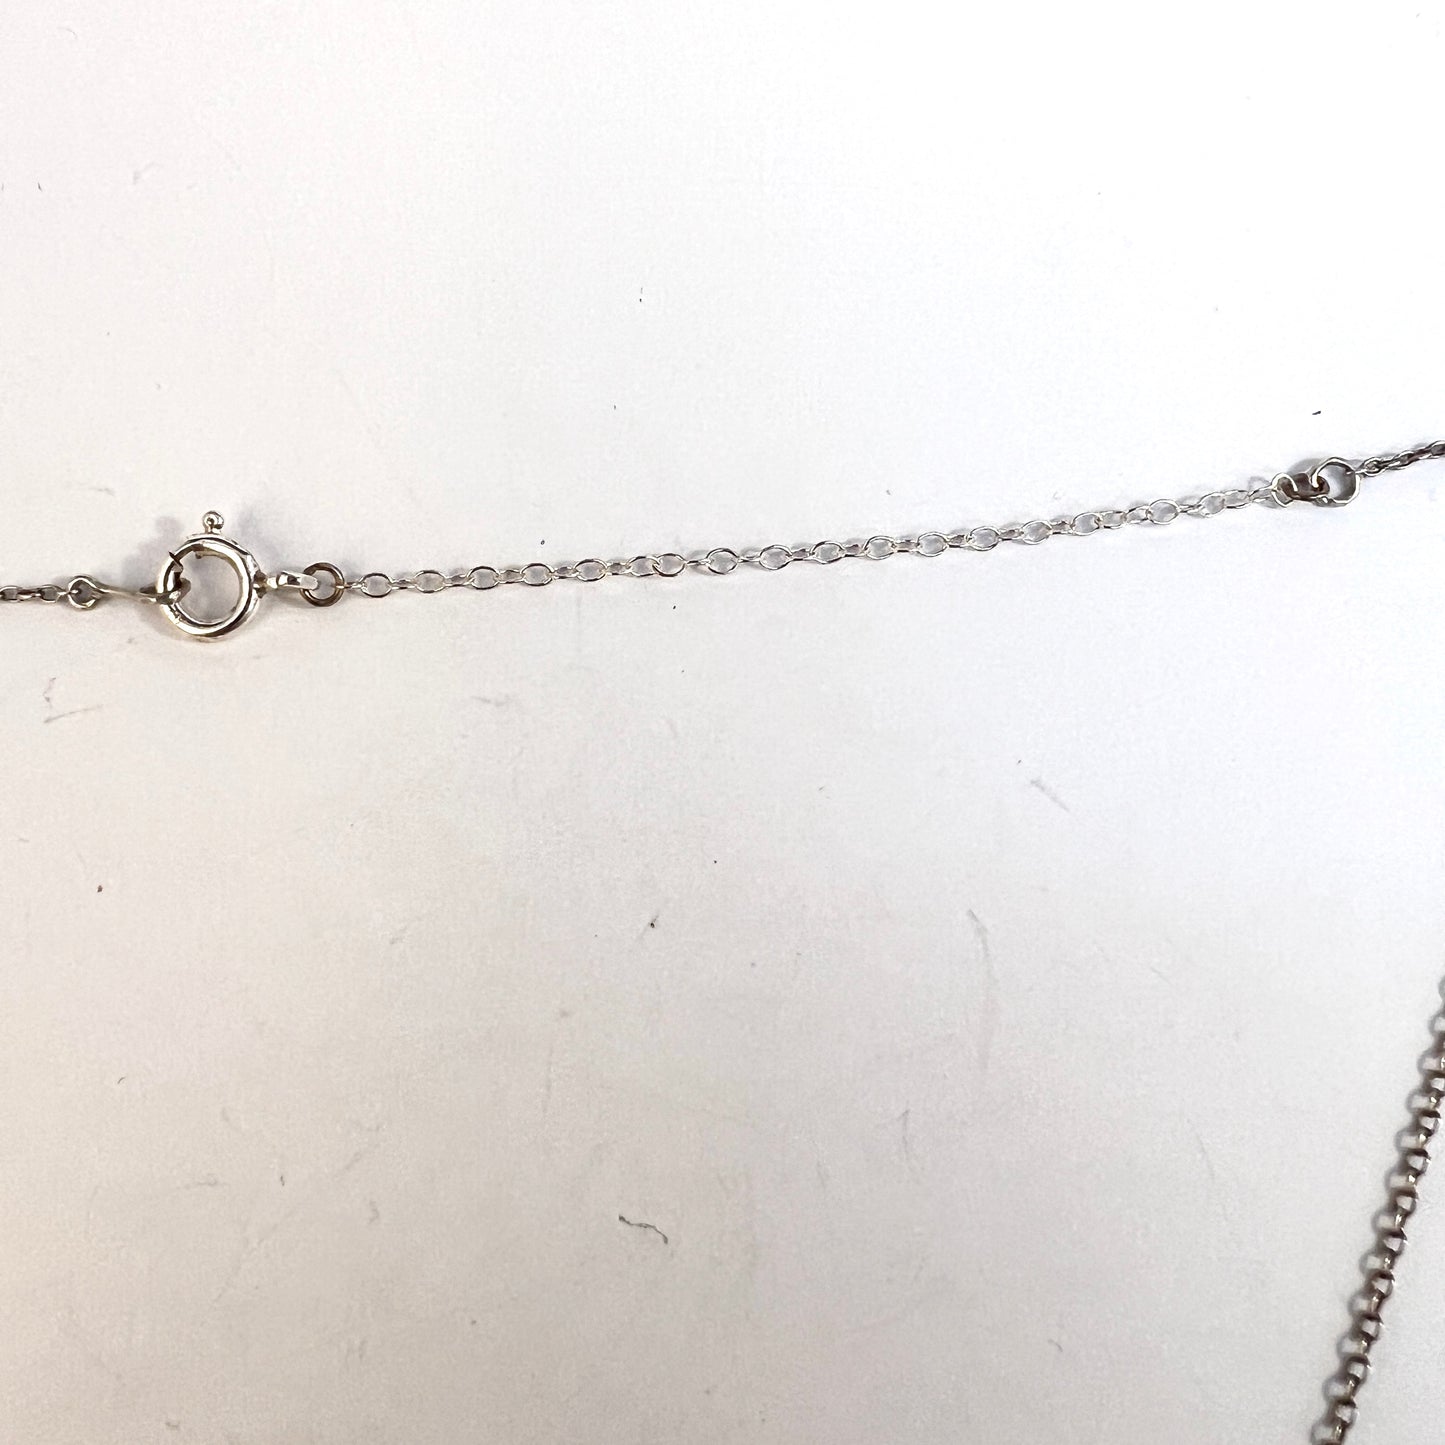 Antique c 1920s Solid Silver Amethyst Necklace.